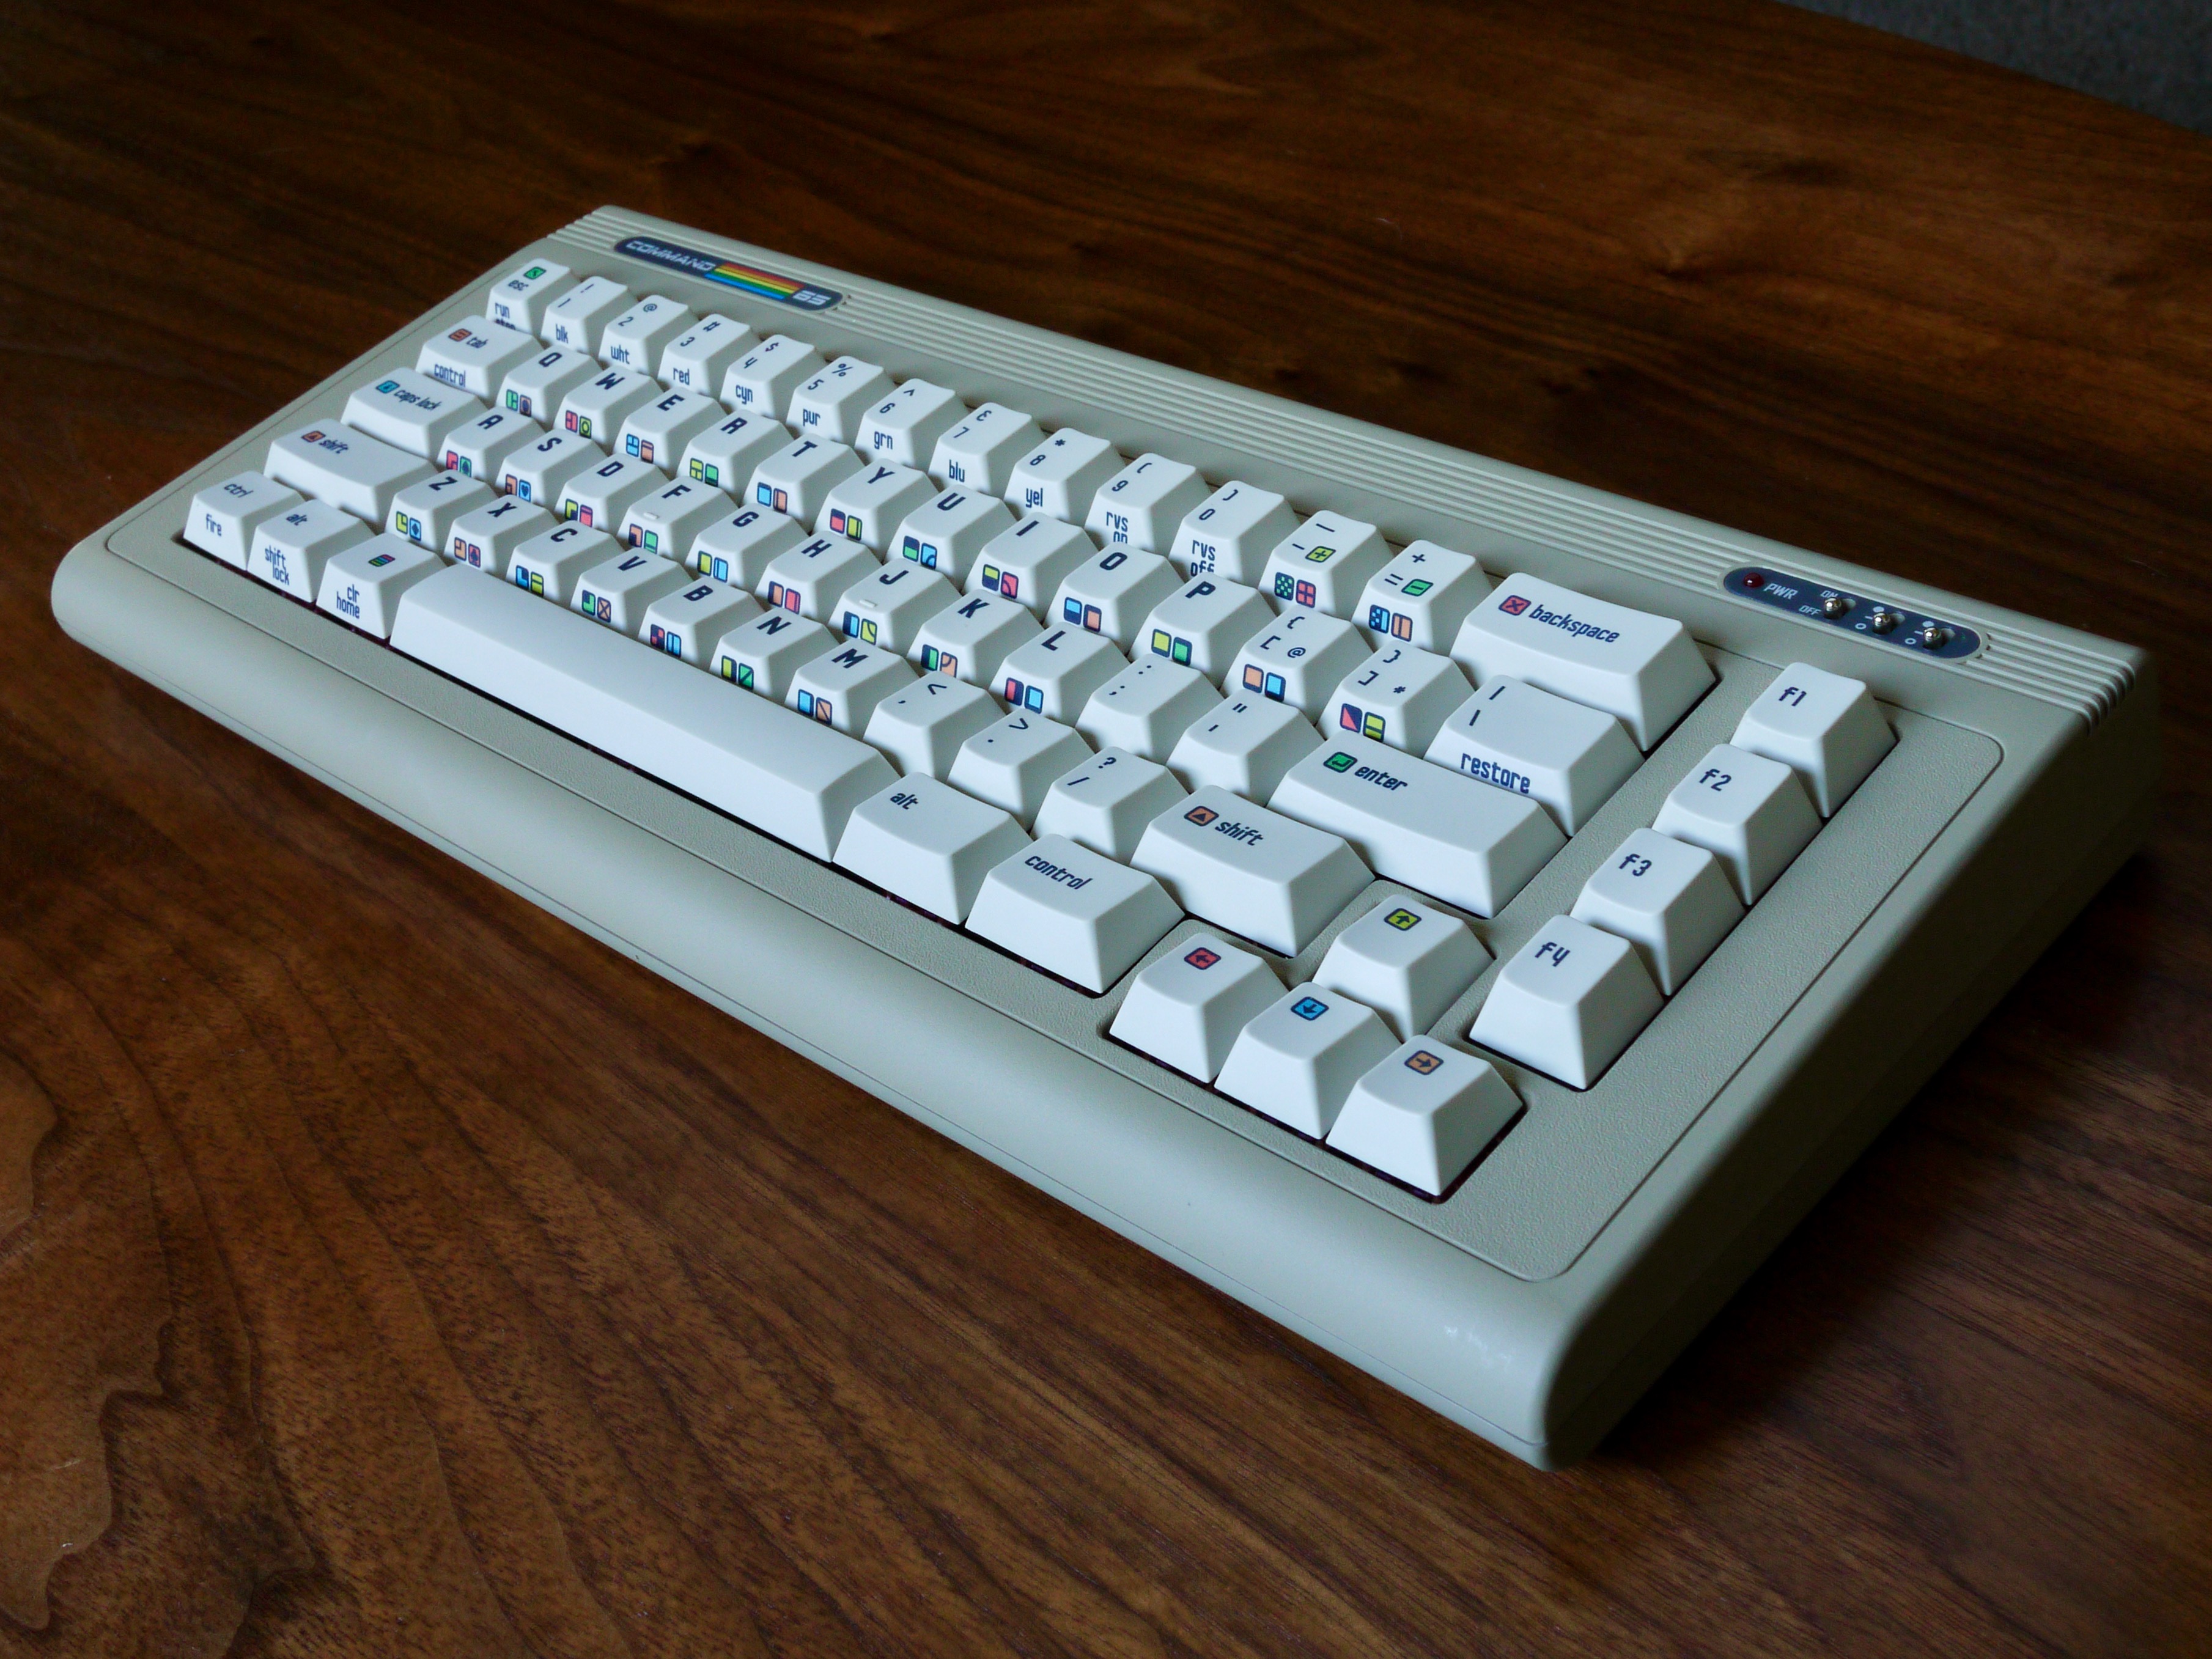 Command 65 mechanical keyboard